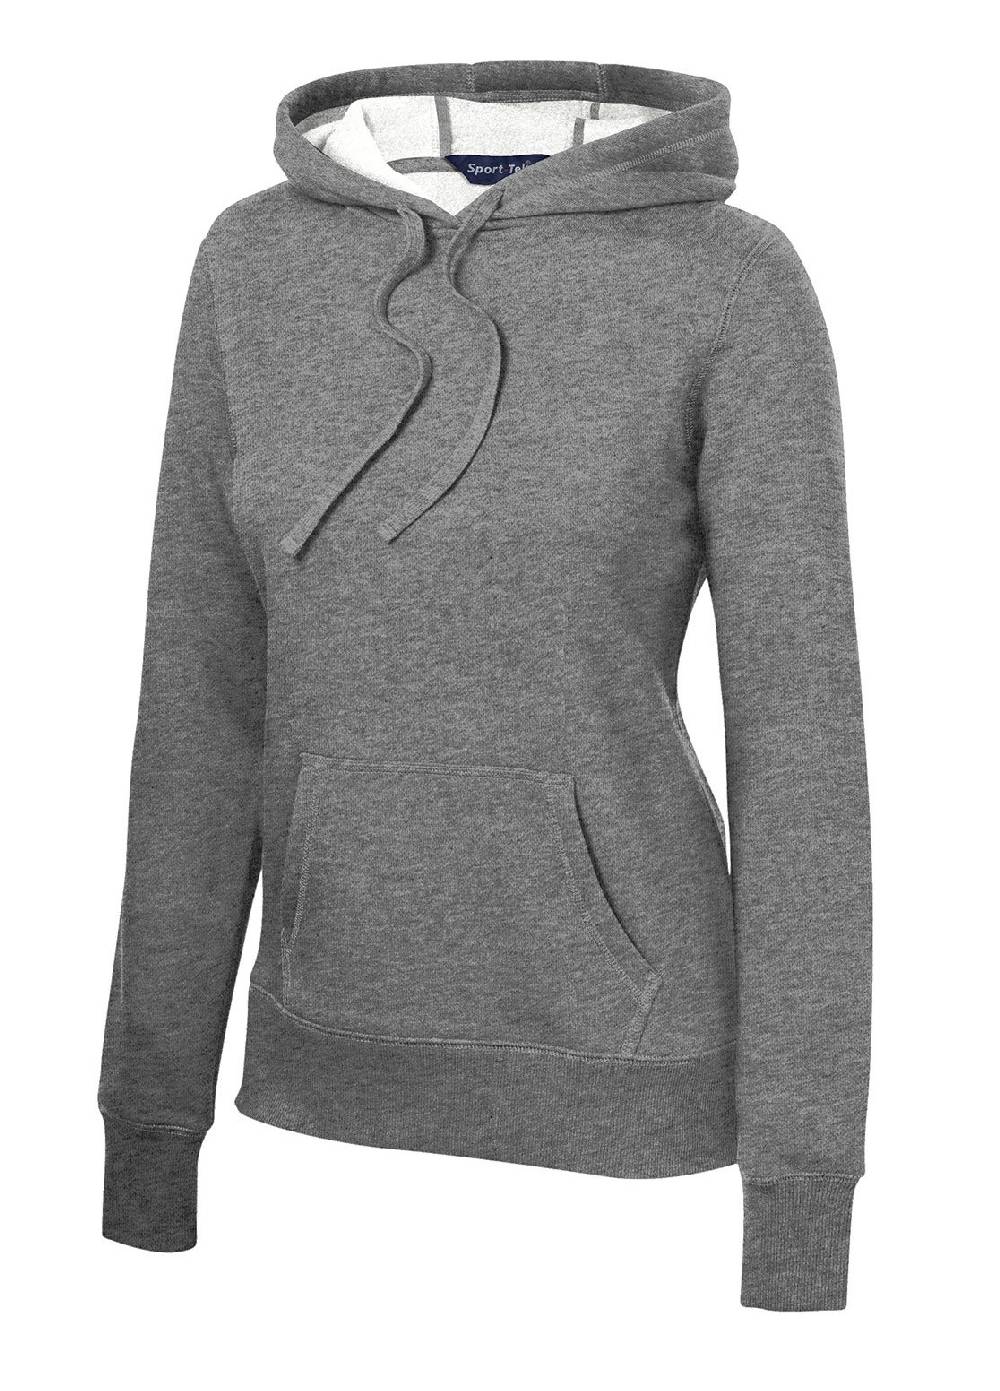 Women's Sport-Tek Pullover Sweatshirts